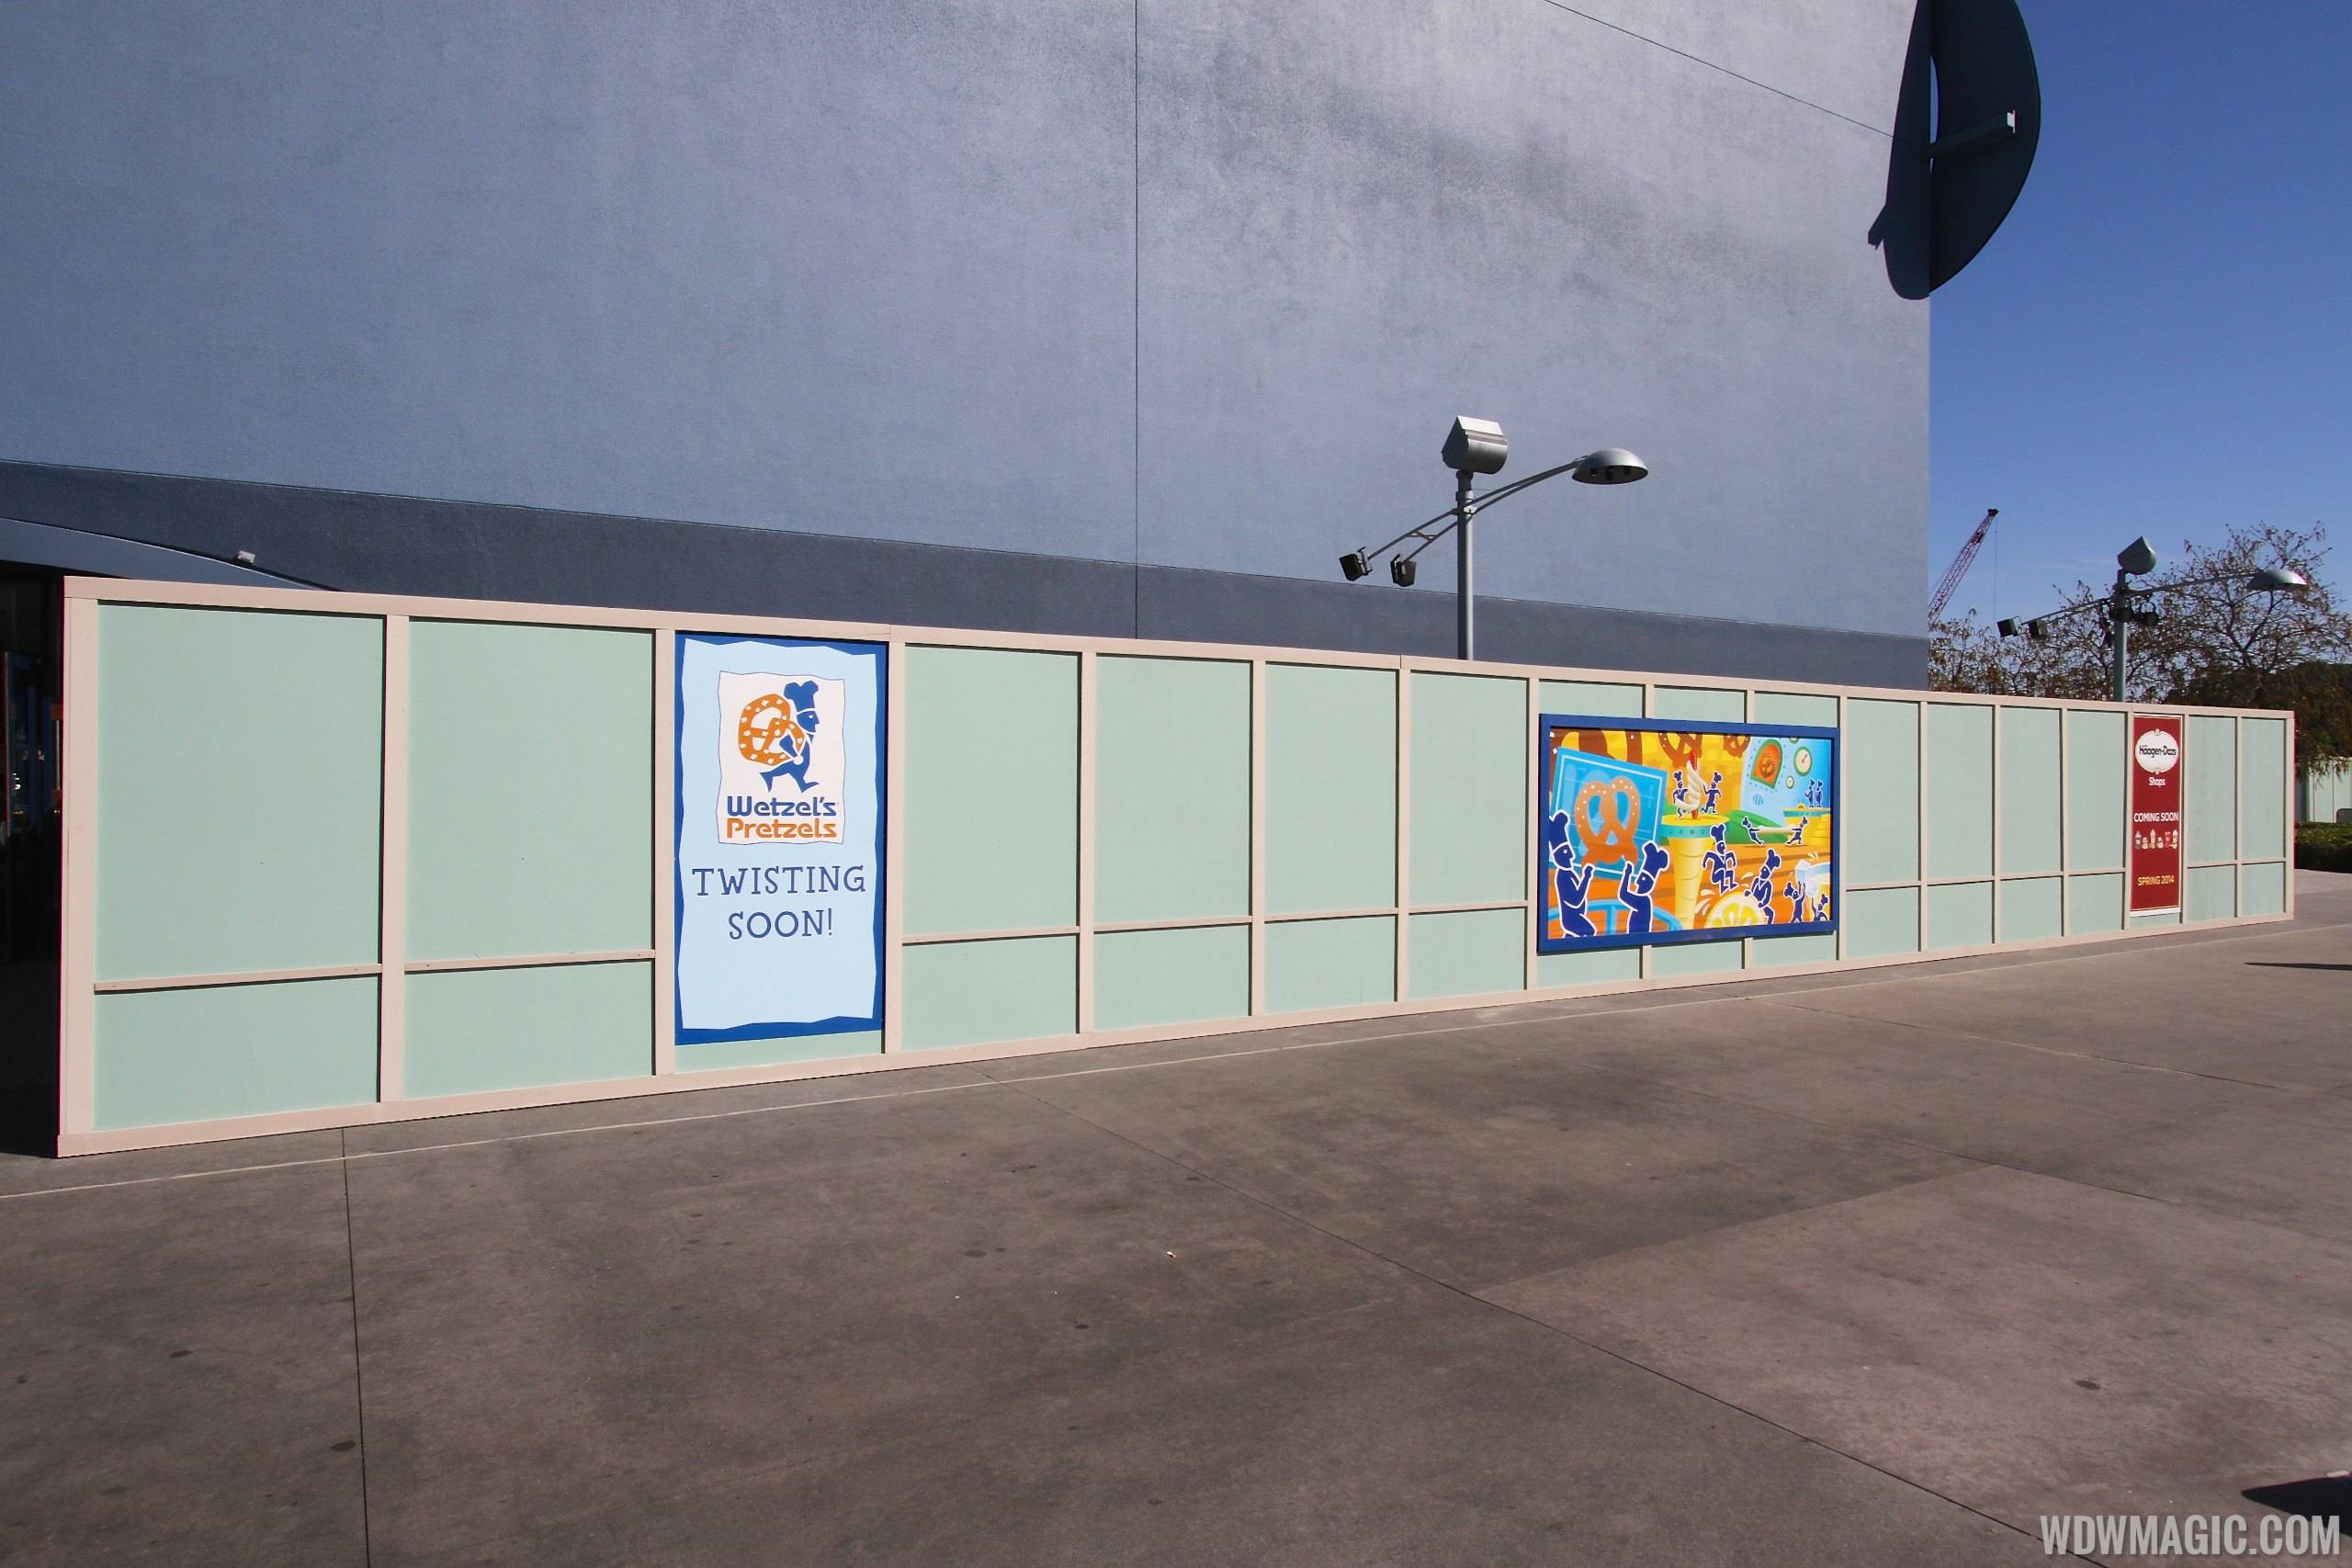 PHOTOS - Wetzel's Pretzels and Haagen Dazs kiosks now under construction on the West Side at Downtown Disney